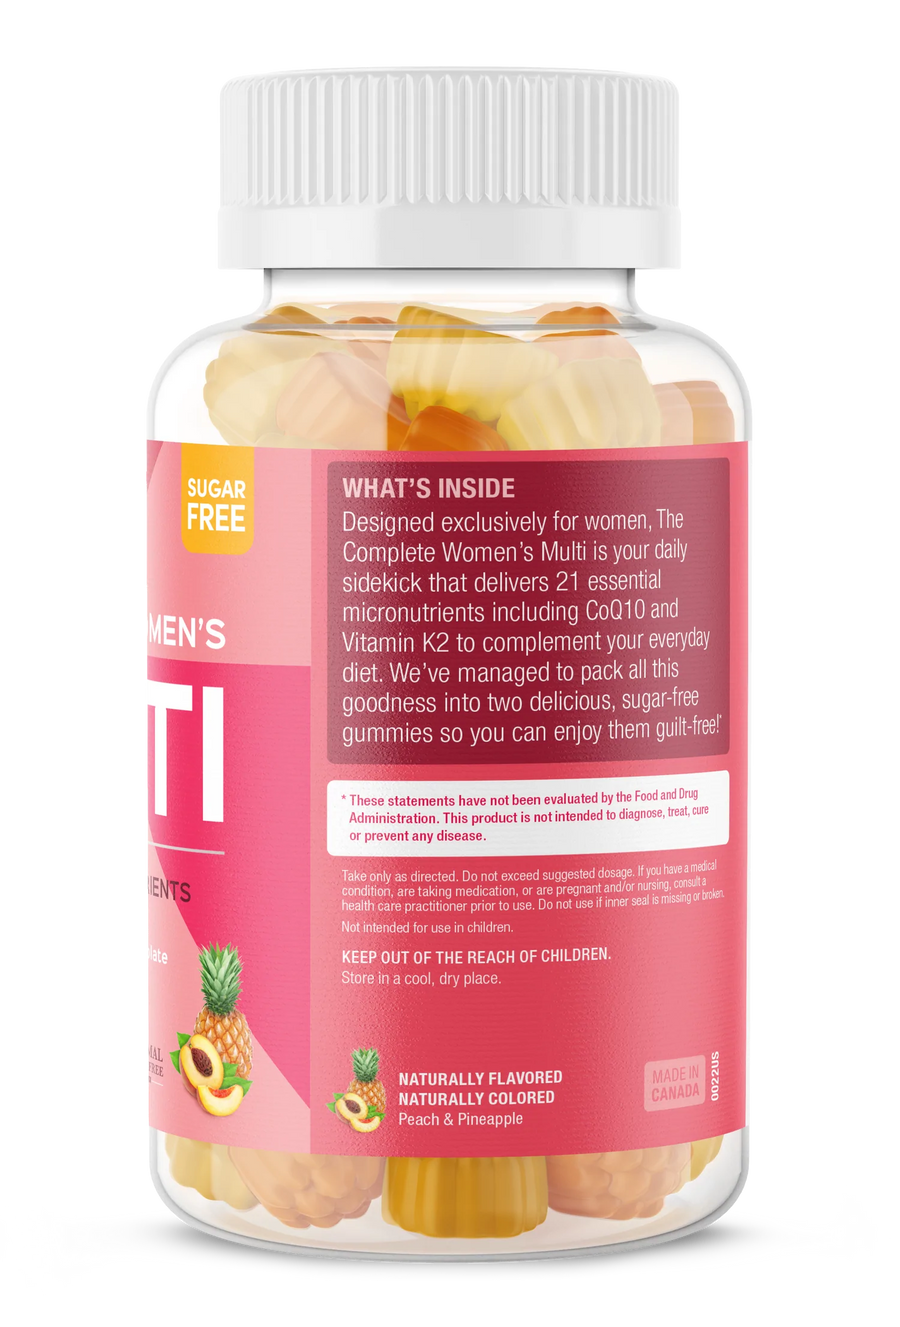 Suku Vitamins The Complete Women’s Multi Peach & Pineapple Flavour 60 Gummies